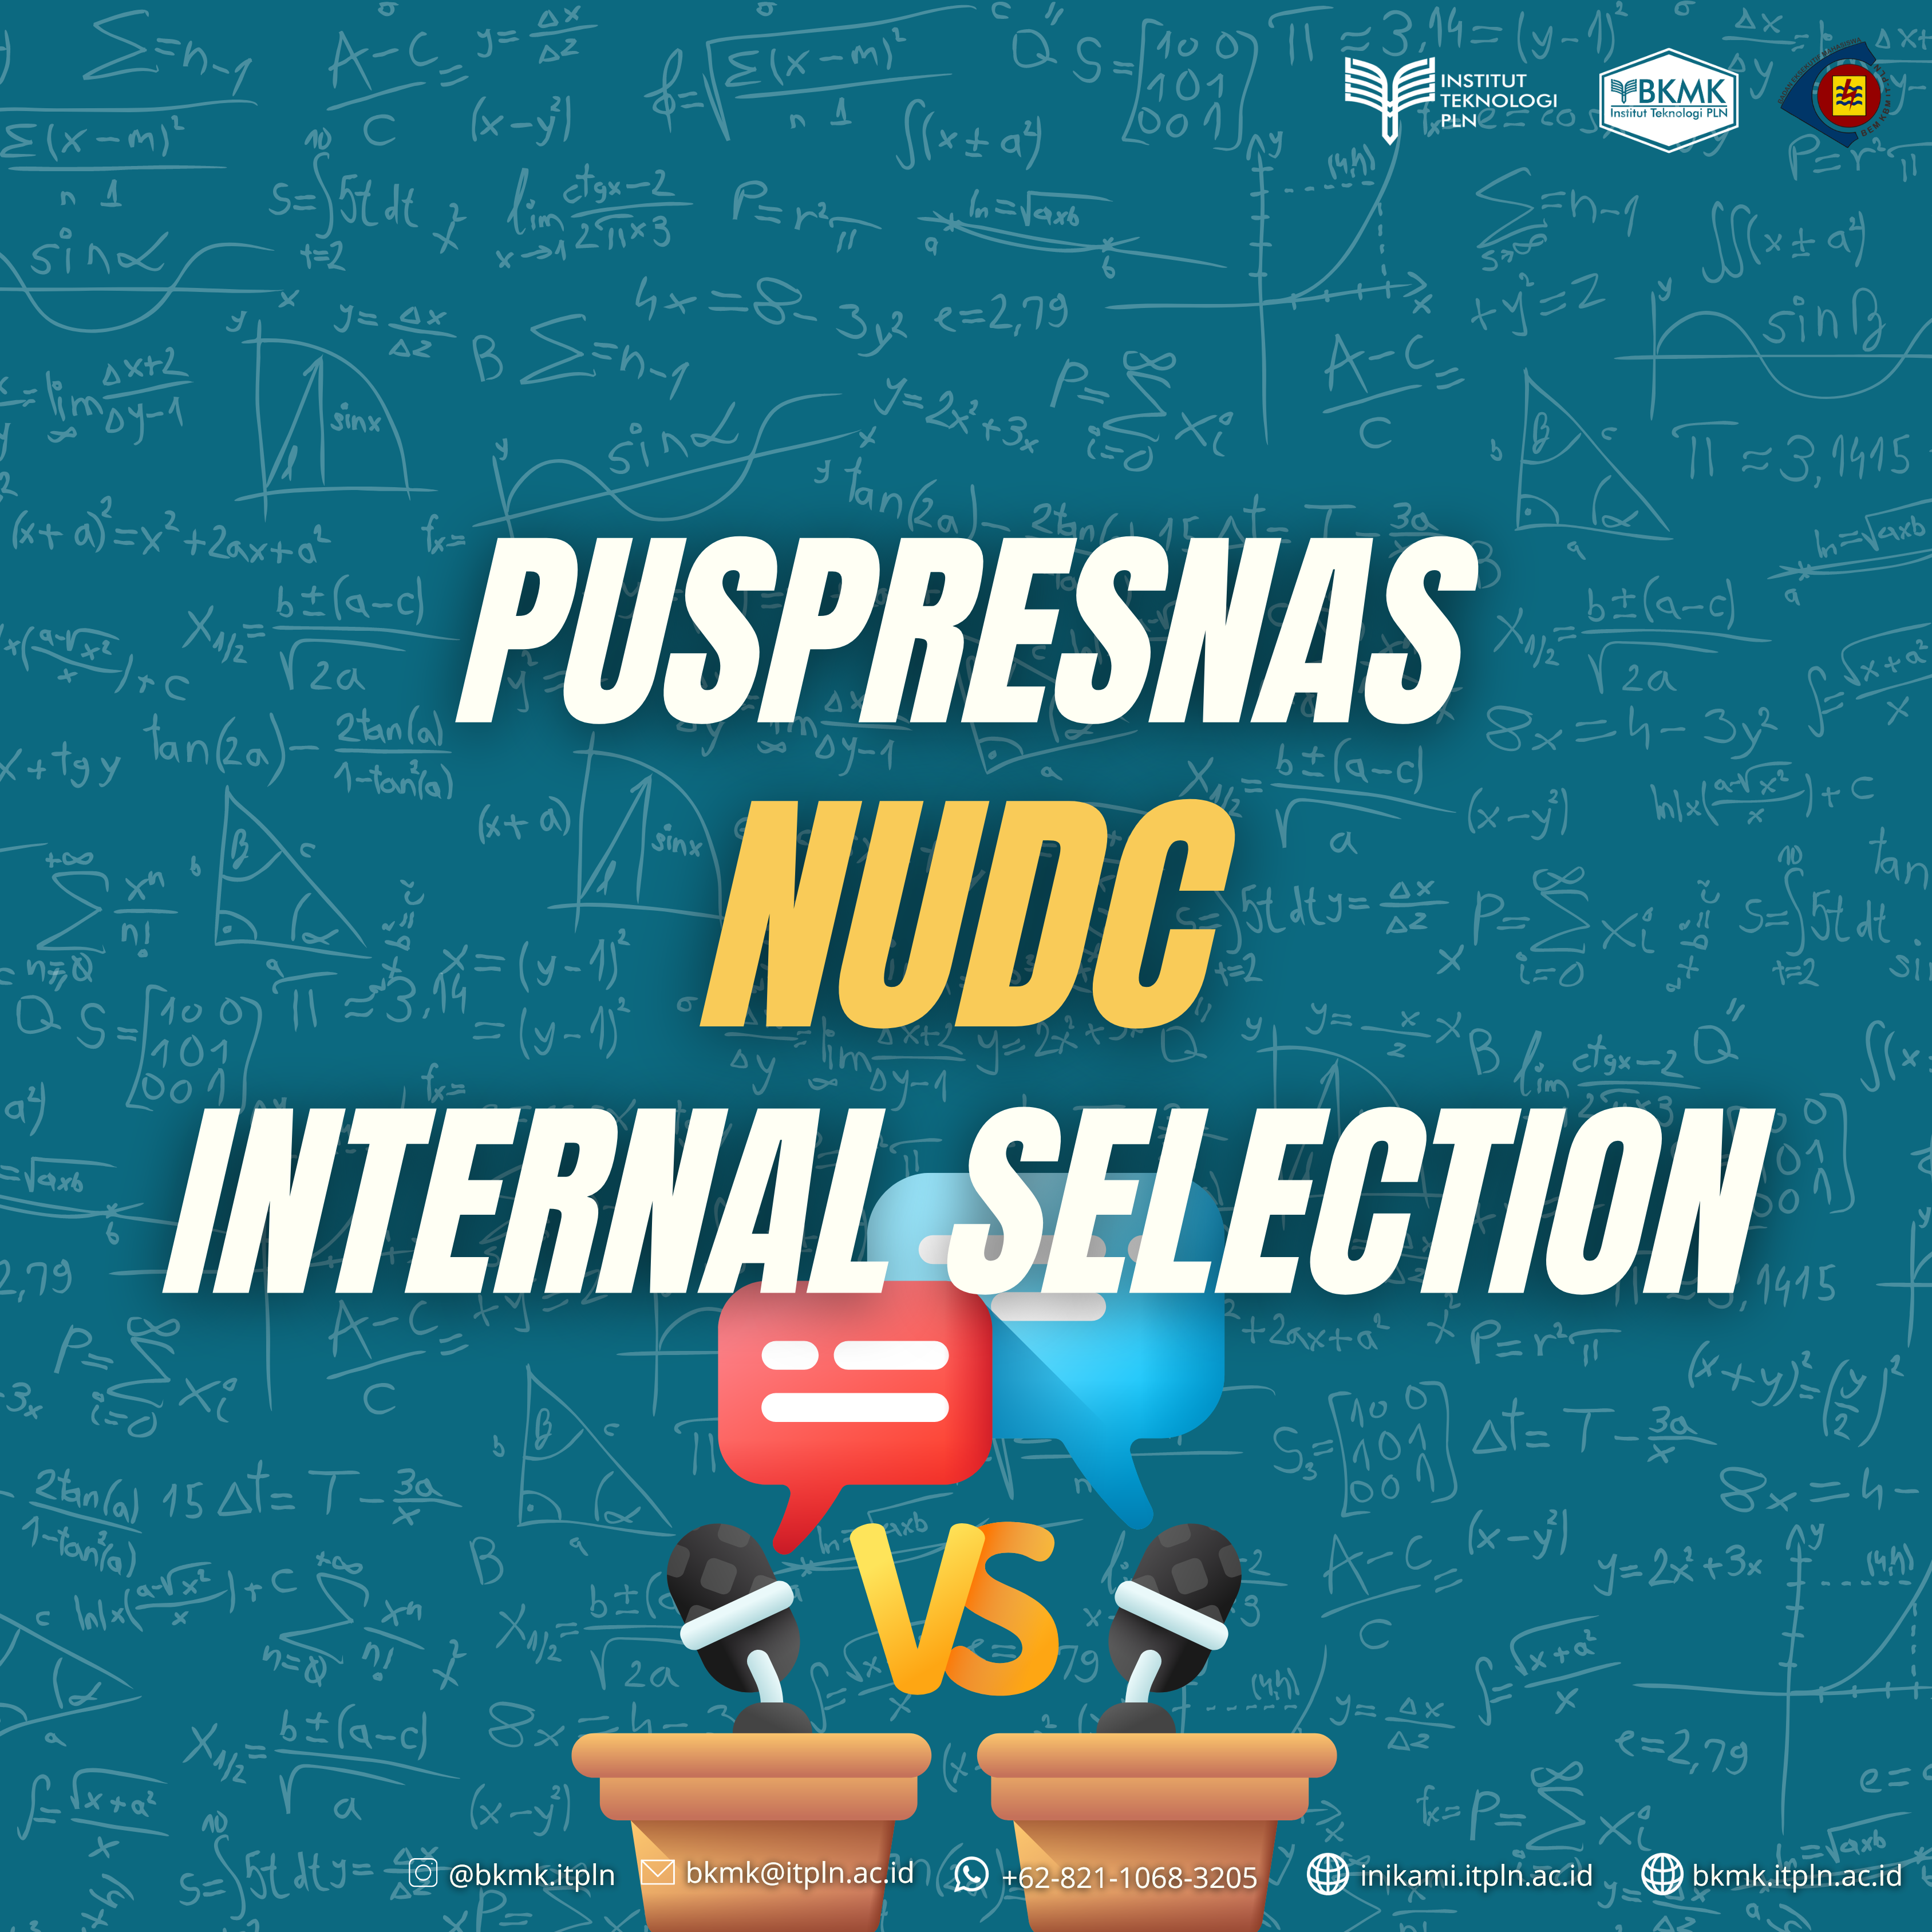 NUDC internal